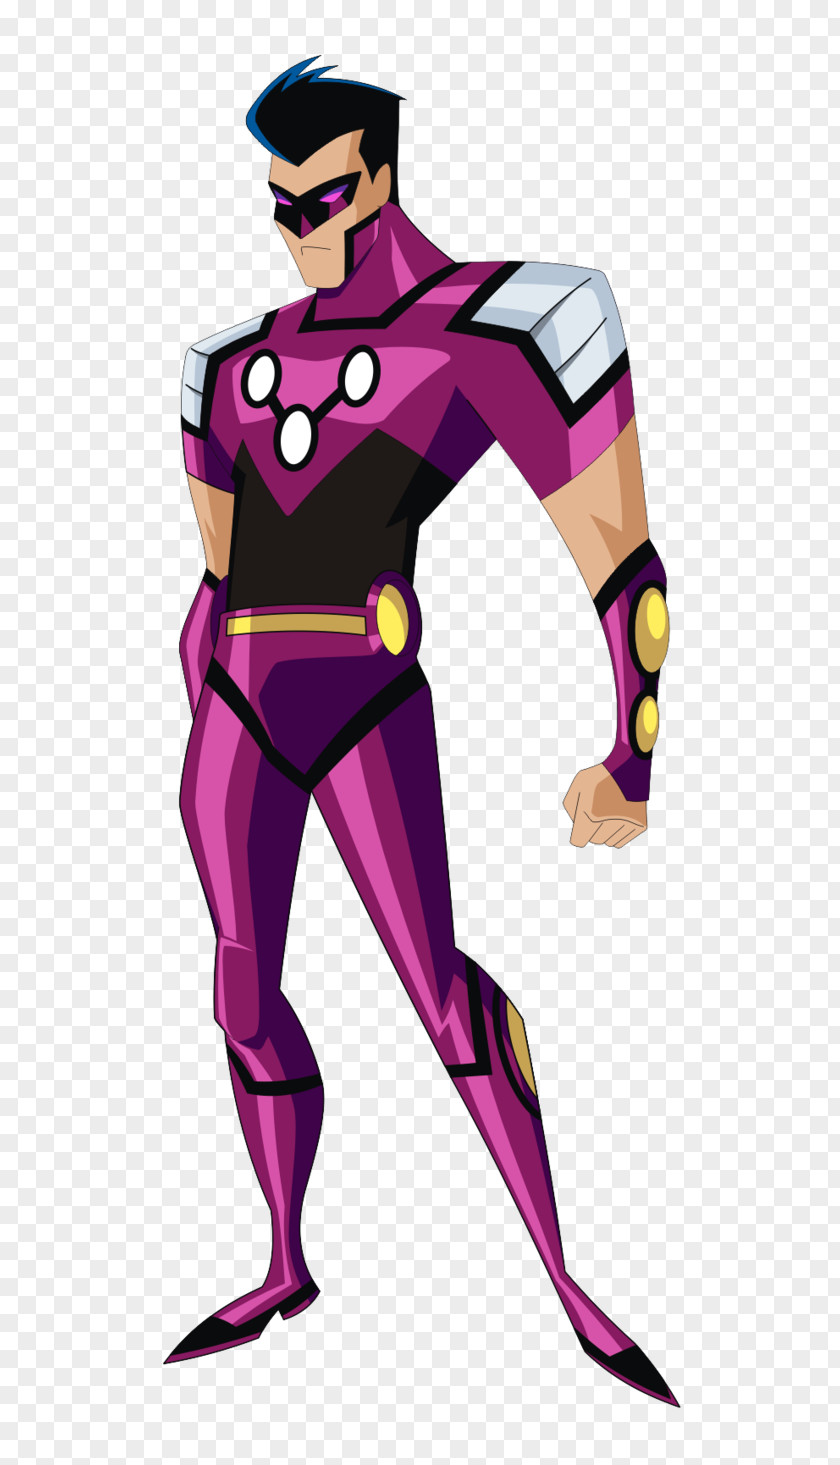 Justice League Doom Superhero Supervillain Illustration Cartoon Purple PNG